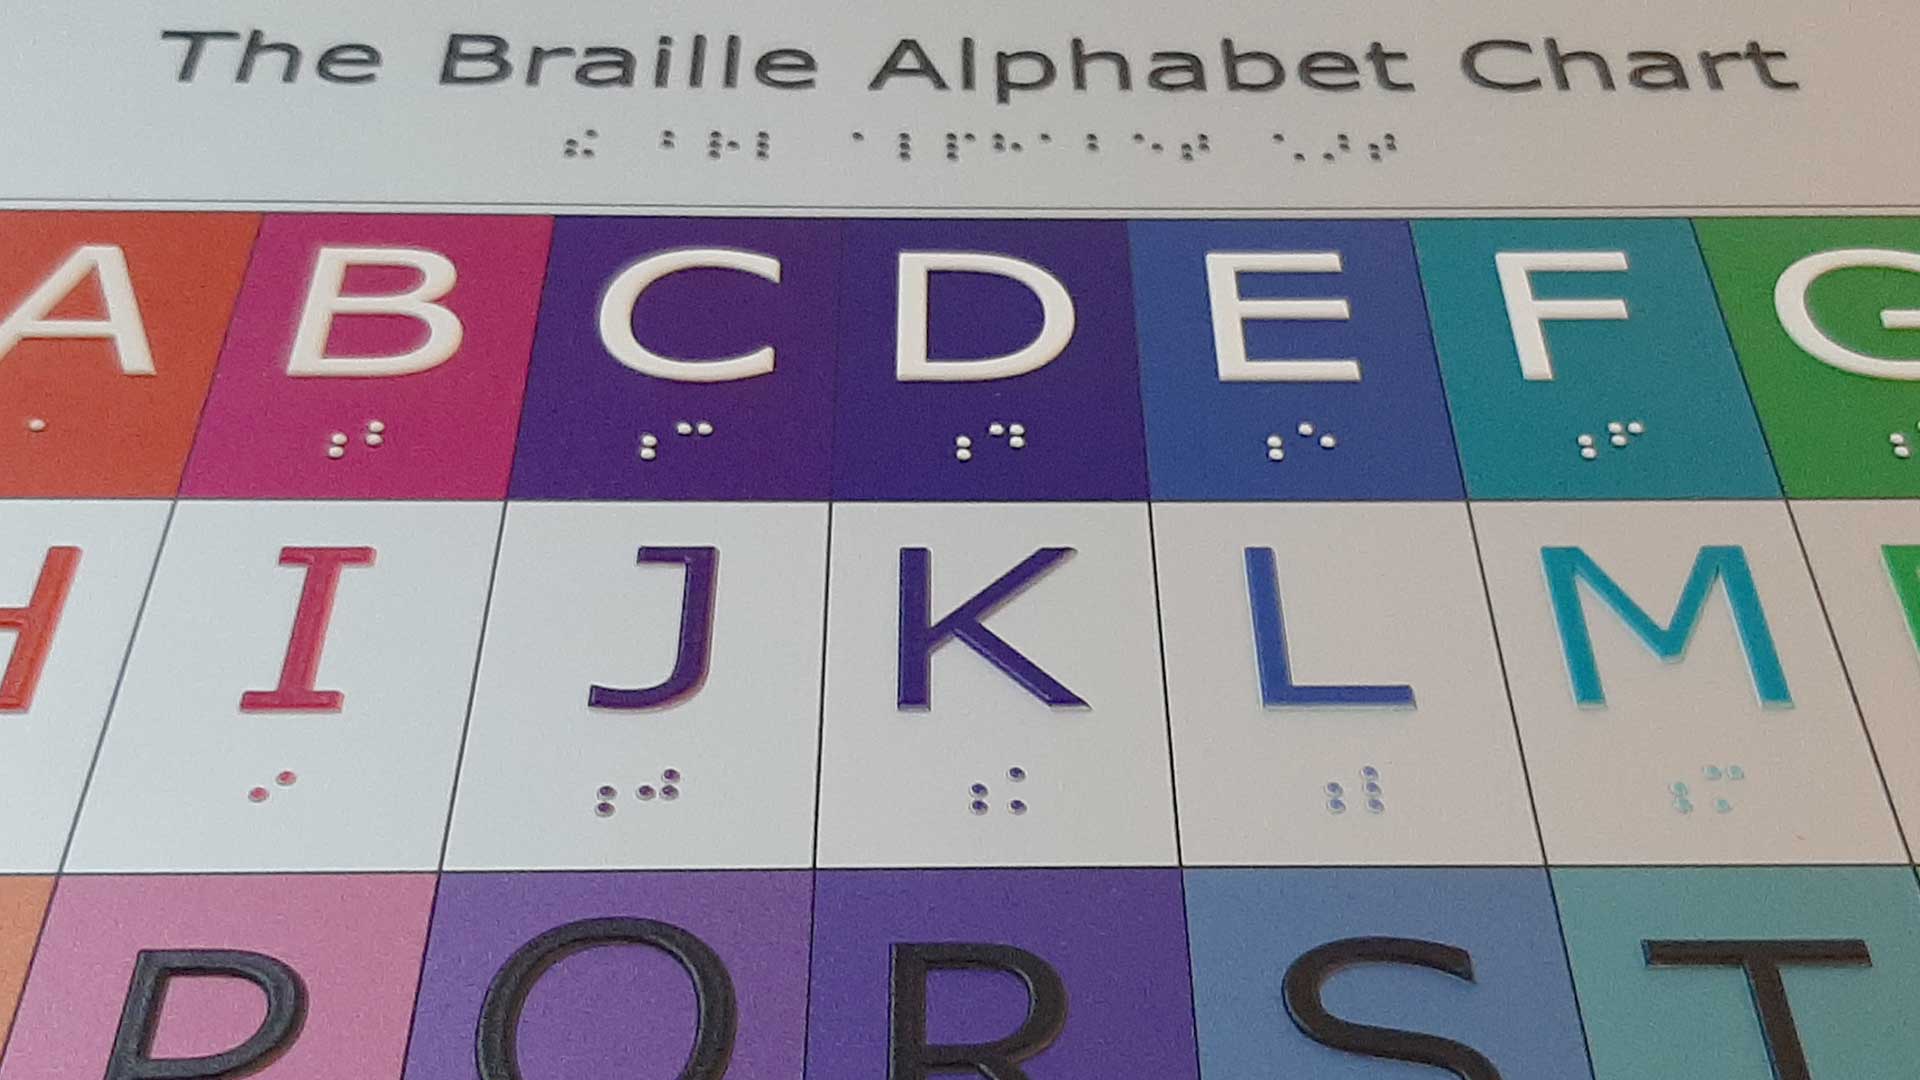 The Braille Alphabet Chart